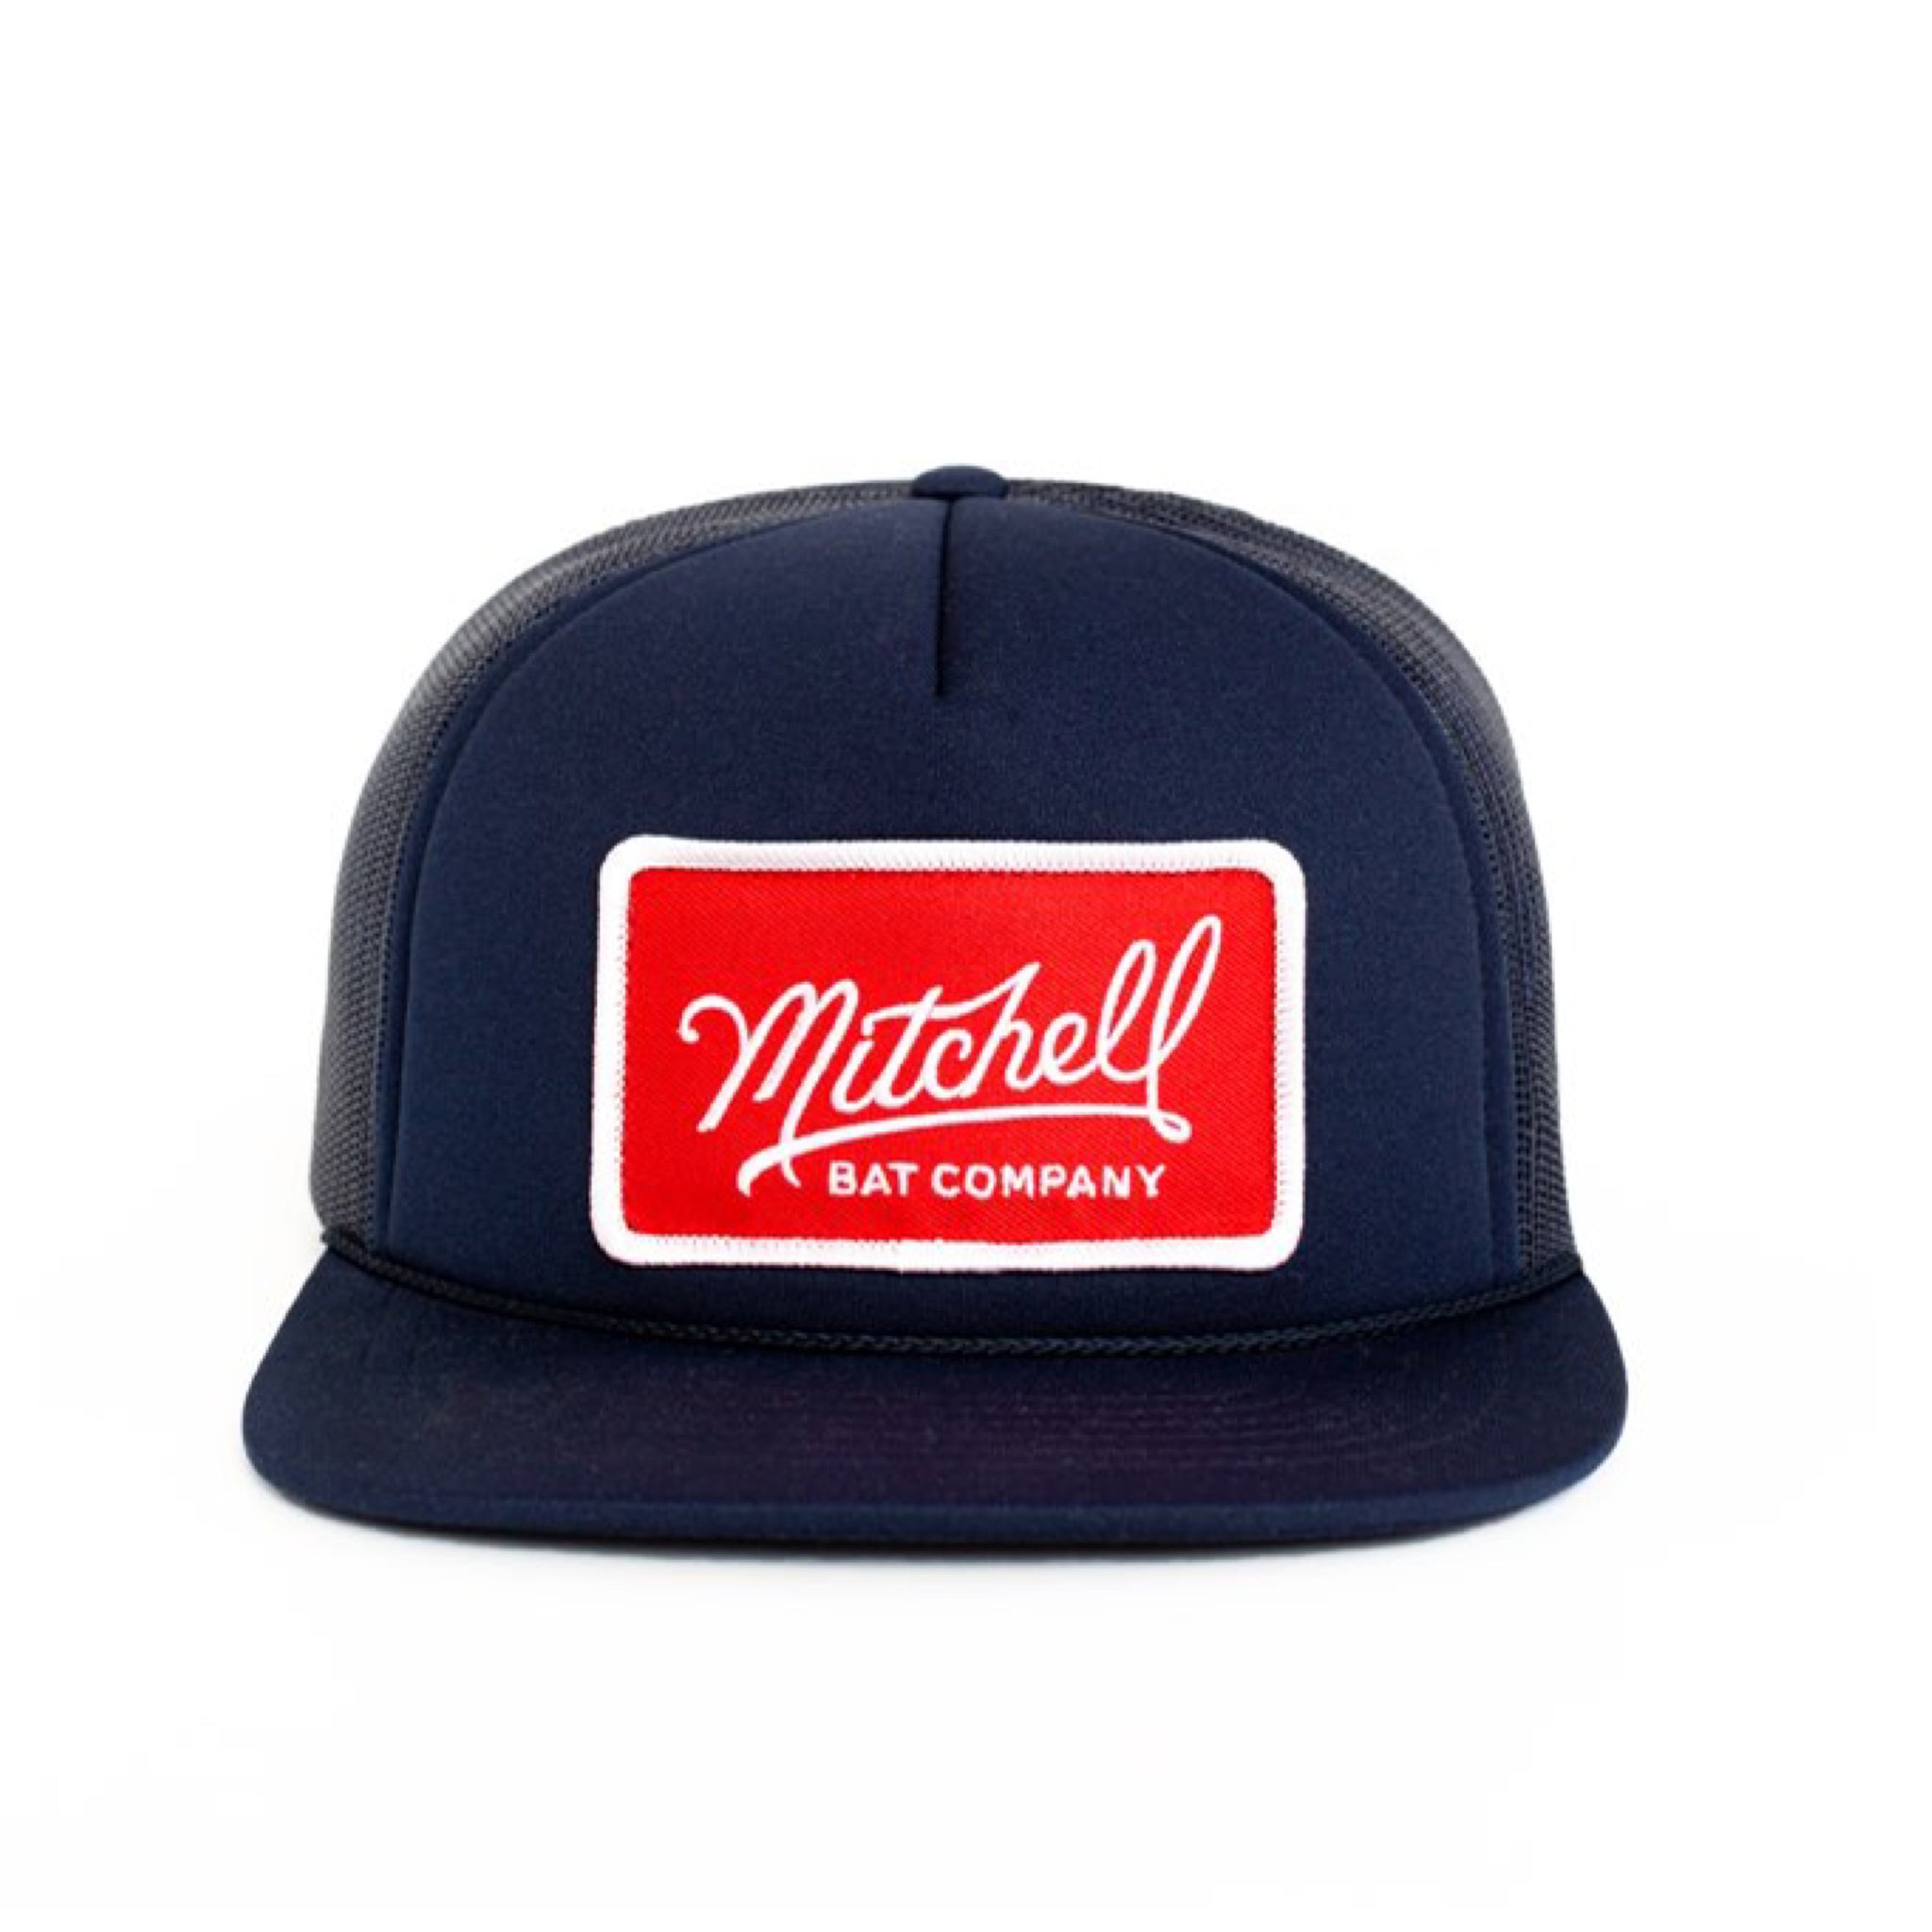 Mitchell Bat Co. Mesh Cap